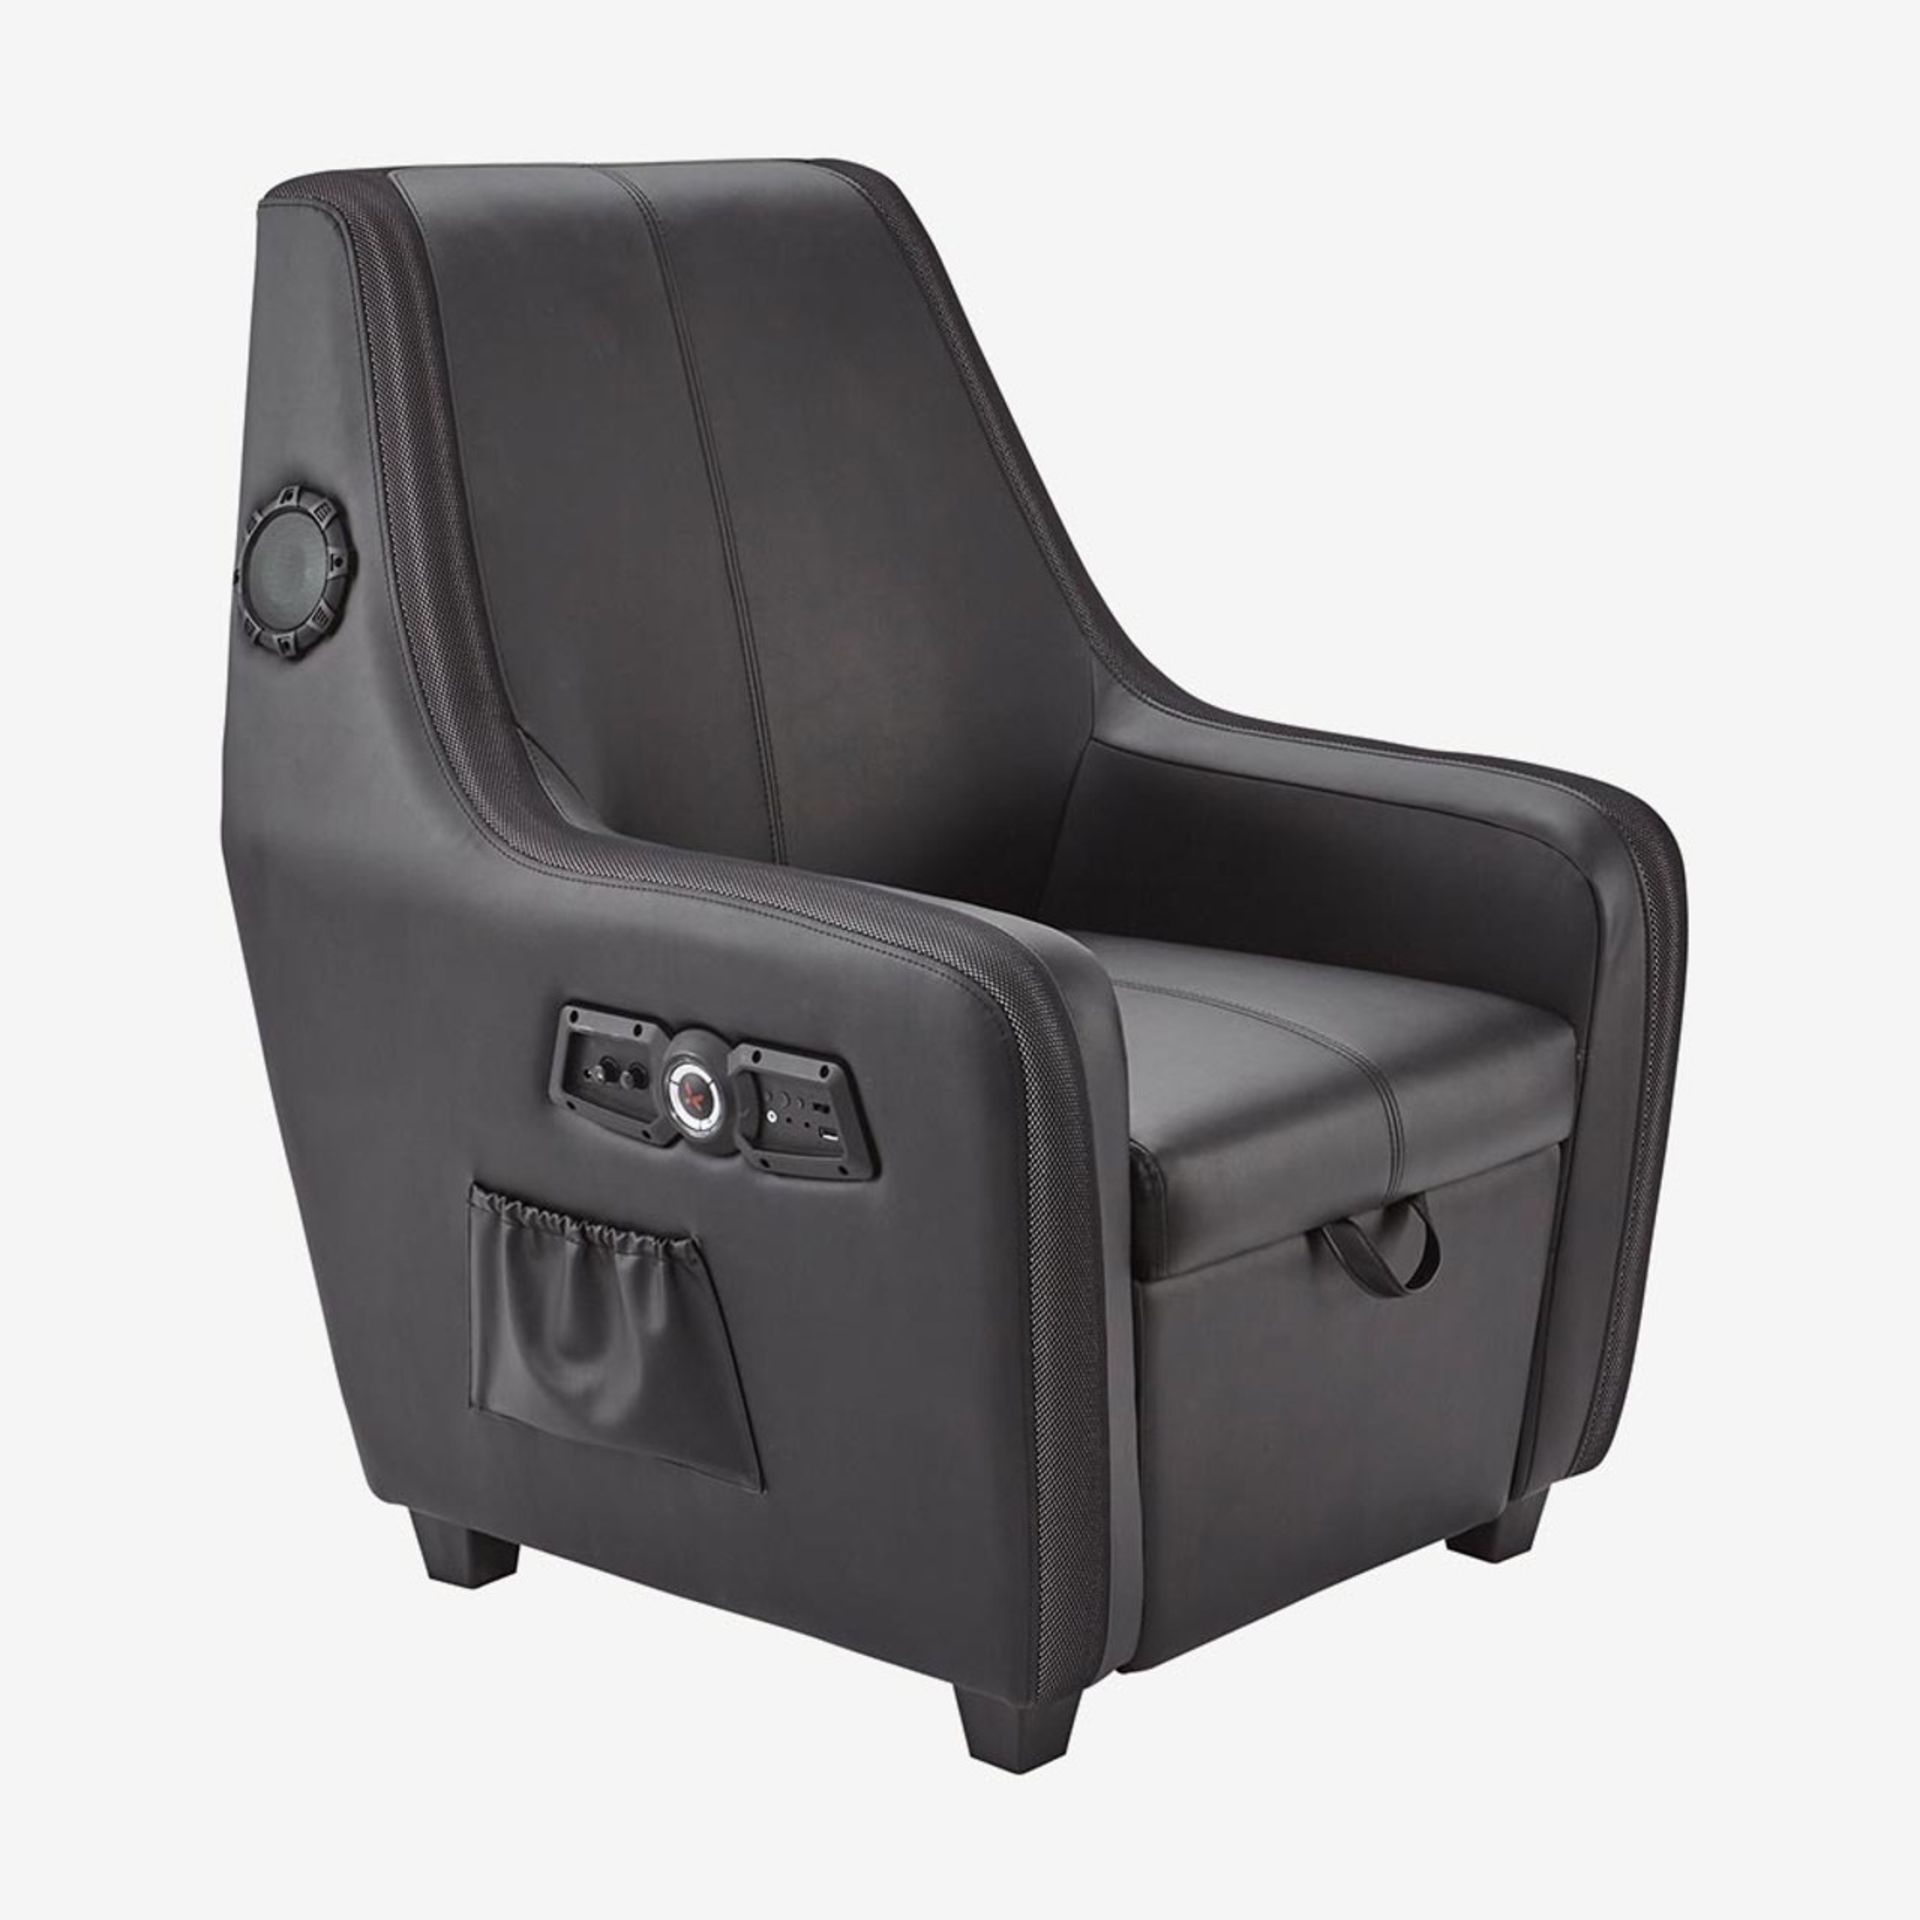 Title: (1/P) RRP £549 X Rocker Premier Maxx 4.1 Audio RGB Gaming Chair Black(H106x W76x D76cm)